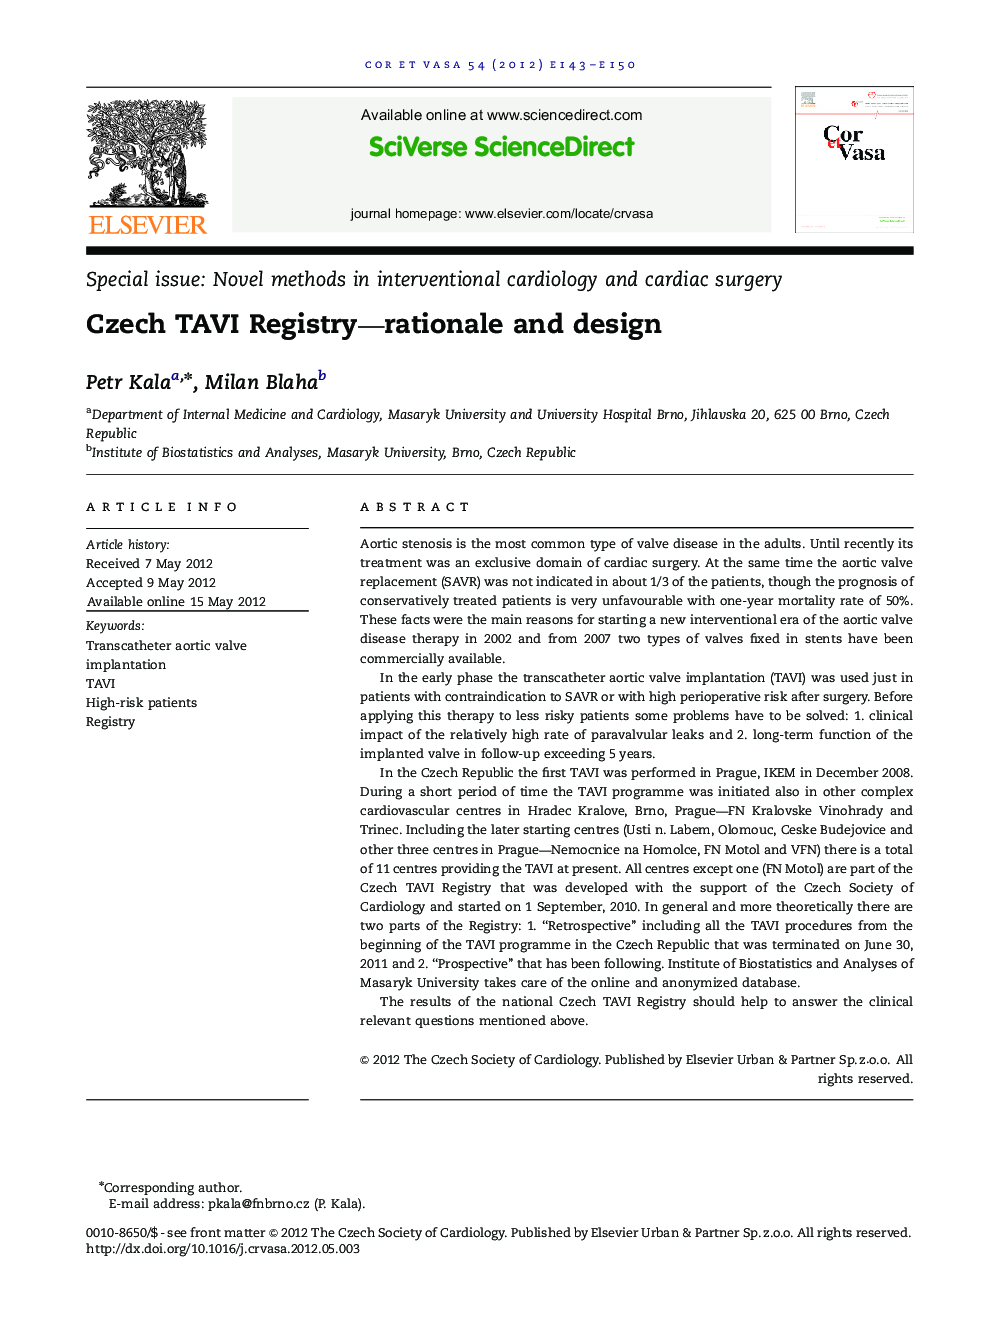 Czech TAVI Registry—rationale and design